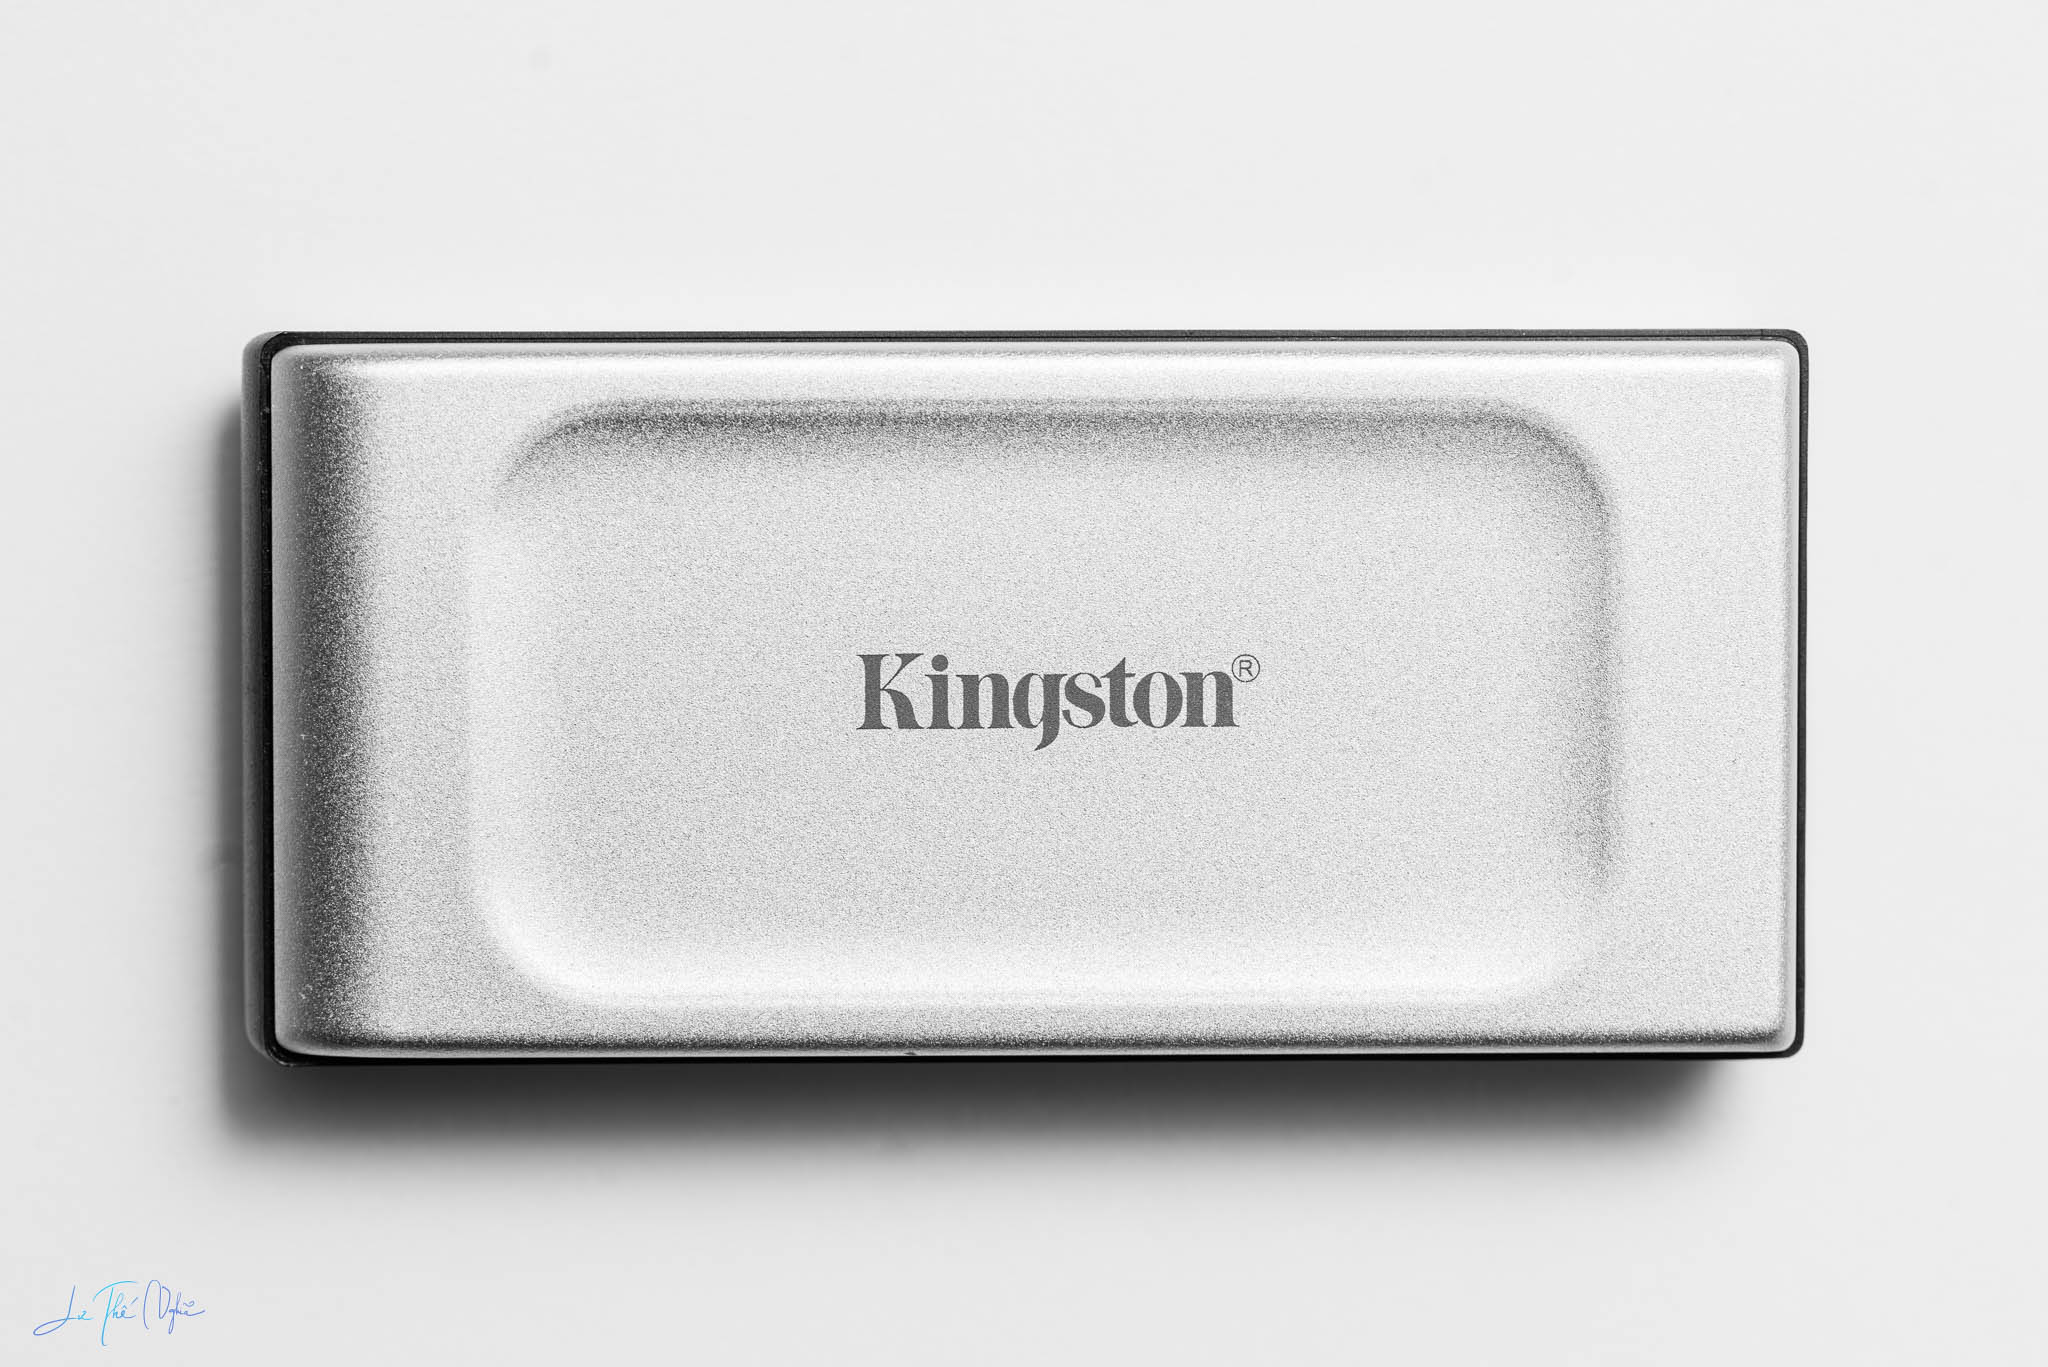 tren-tay-kingston-xs2000-portable-ssd-2-tb-tinhte-4.jpg